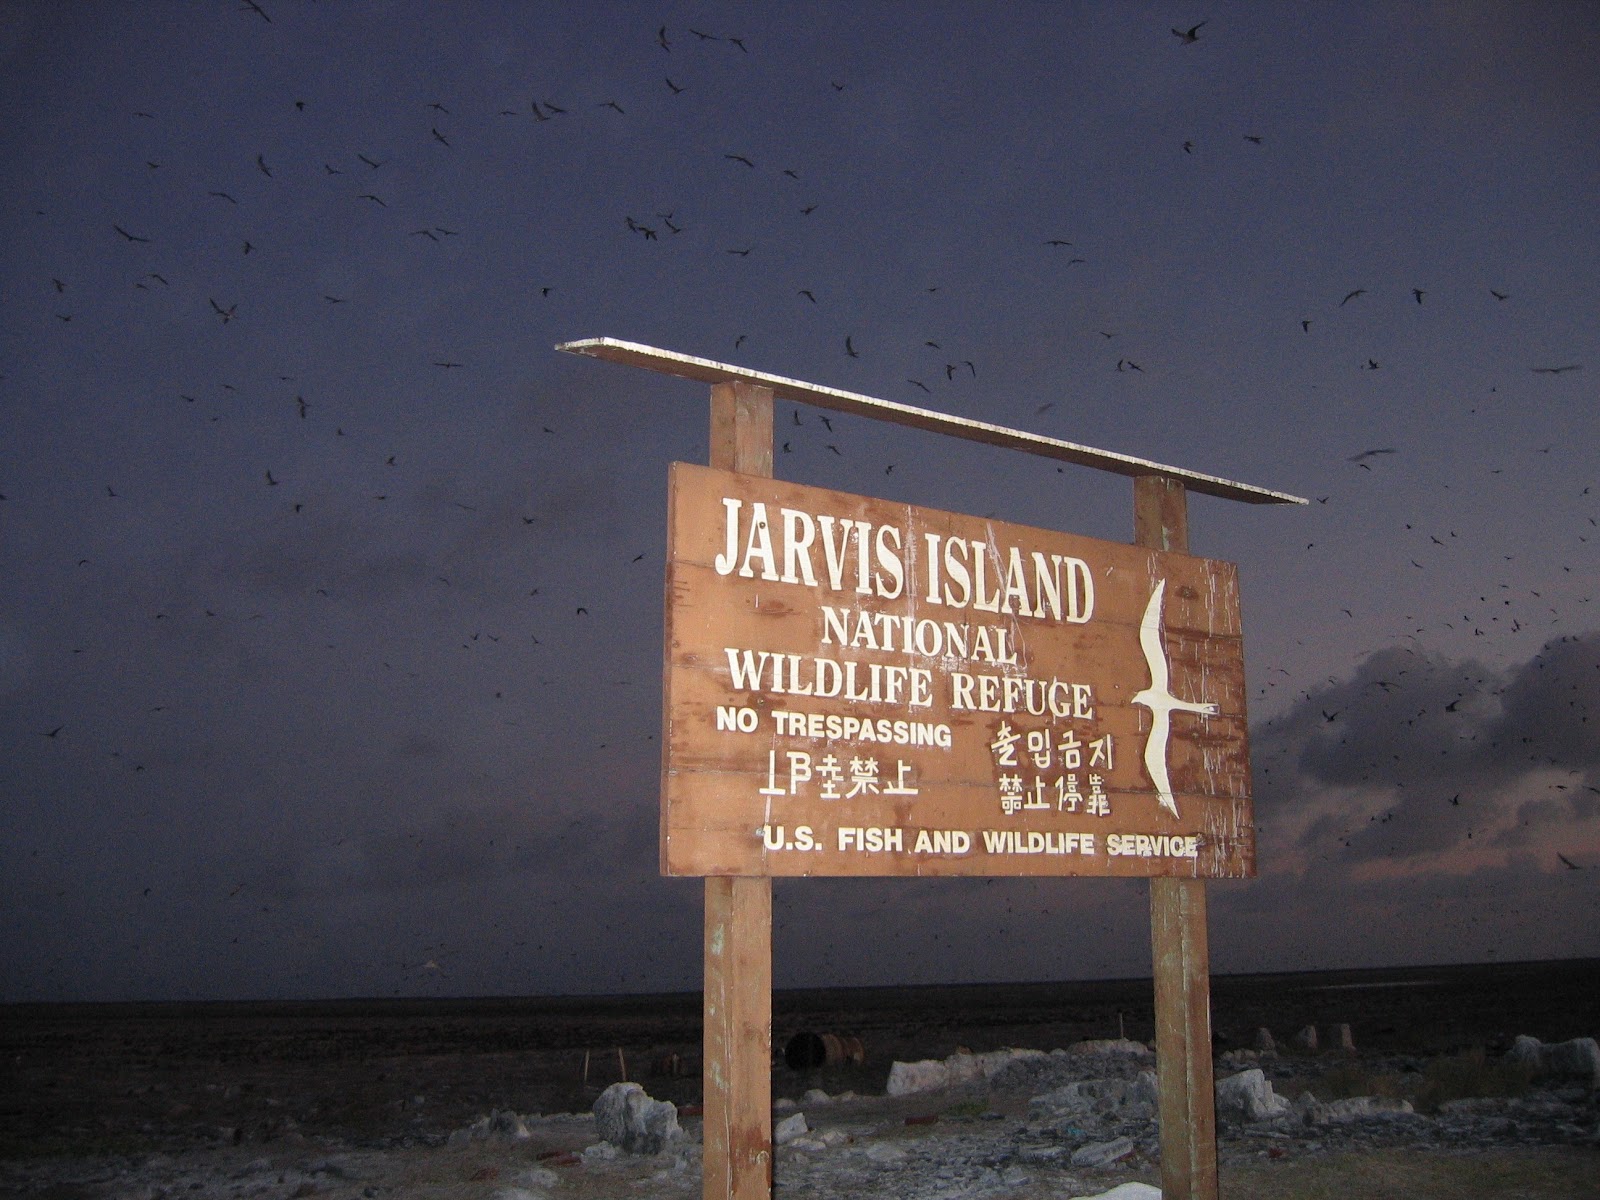 http://3.bp.blogspot.com/-hQEWD1pnv4Q/UC-InlJVnqI/AAAAAAAAFsA/oQmylhPlKhc/s1600/Jarvis+Island.jpg